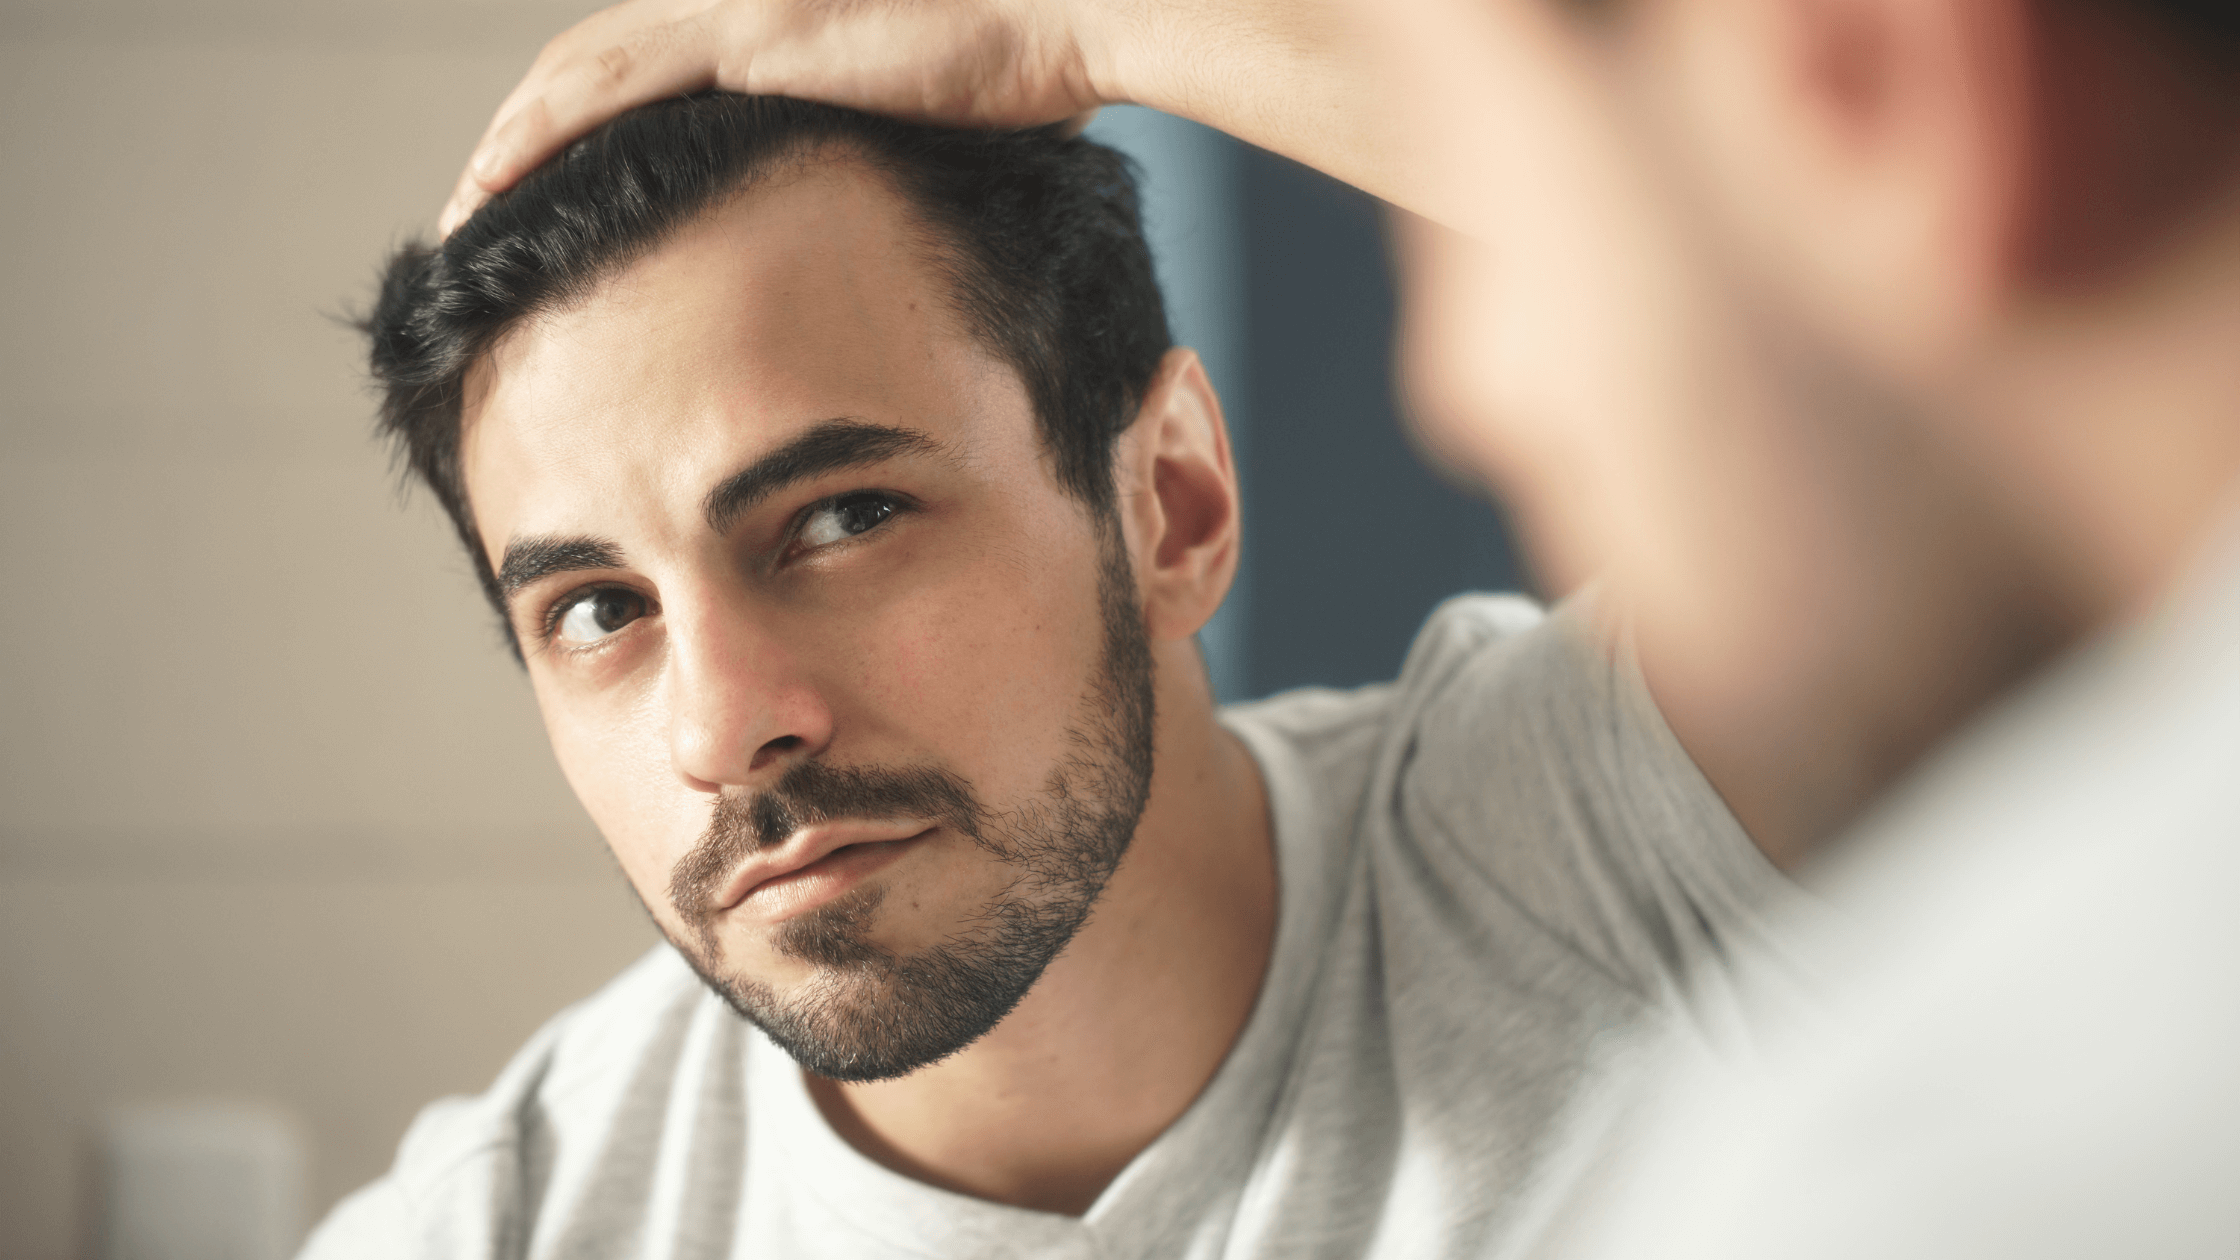 Microneedling for Hair Loss in Men